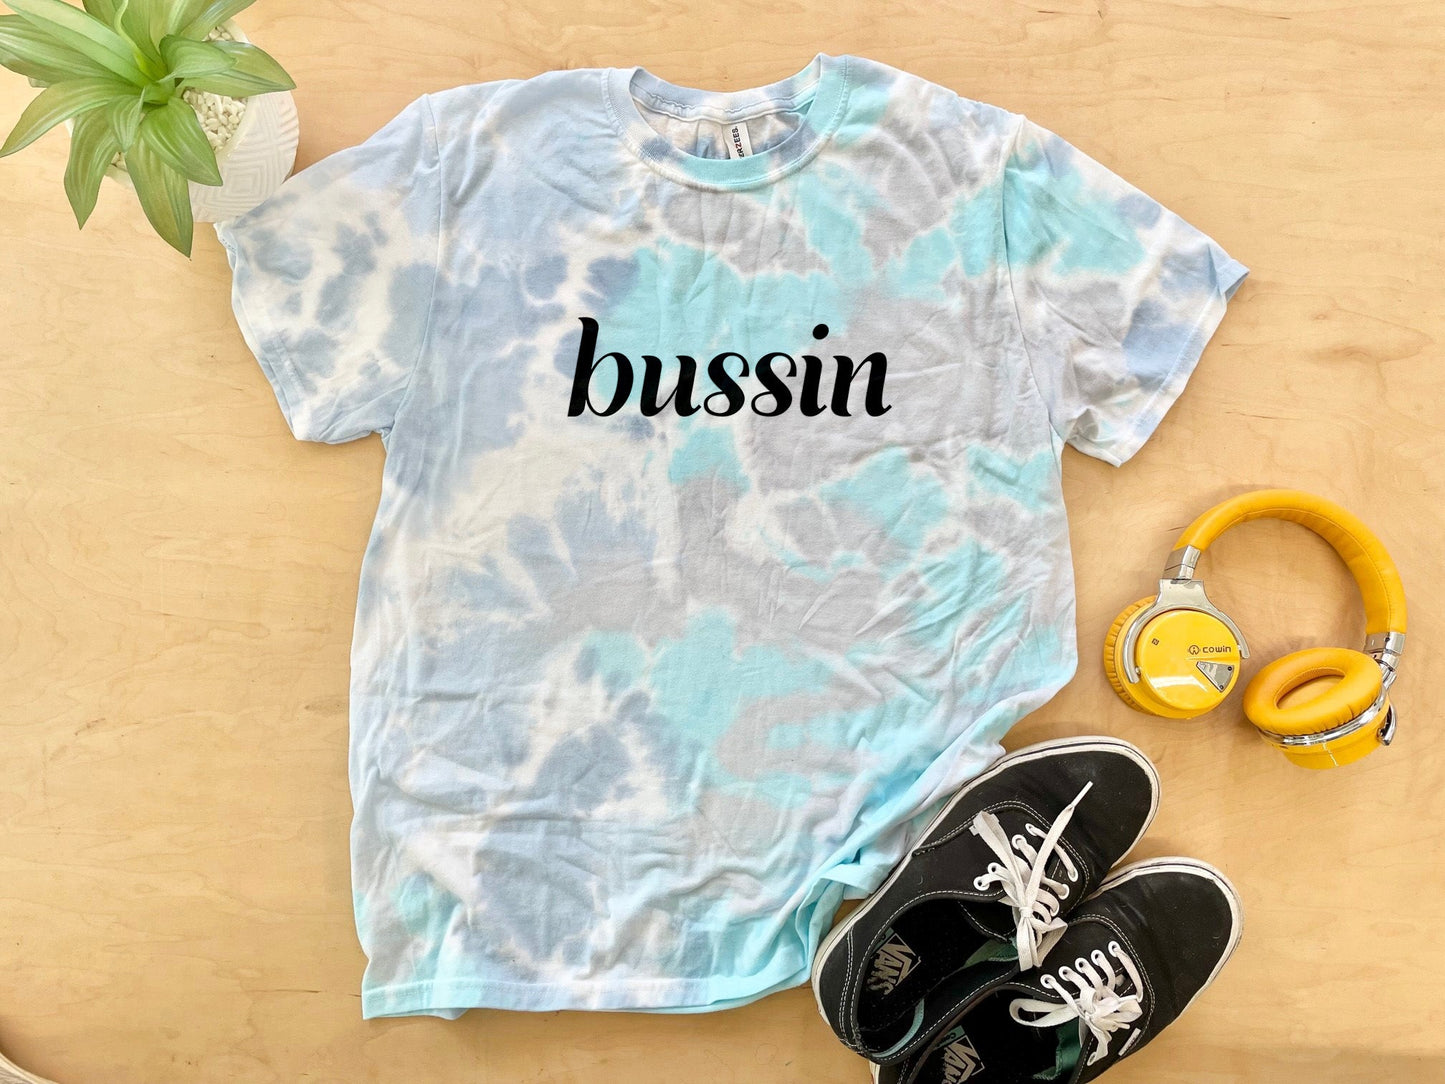 Bussin - Mens/Unisex Tie Dye Tee - Blue